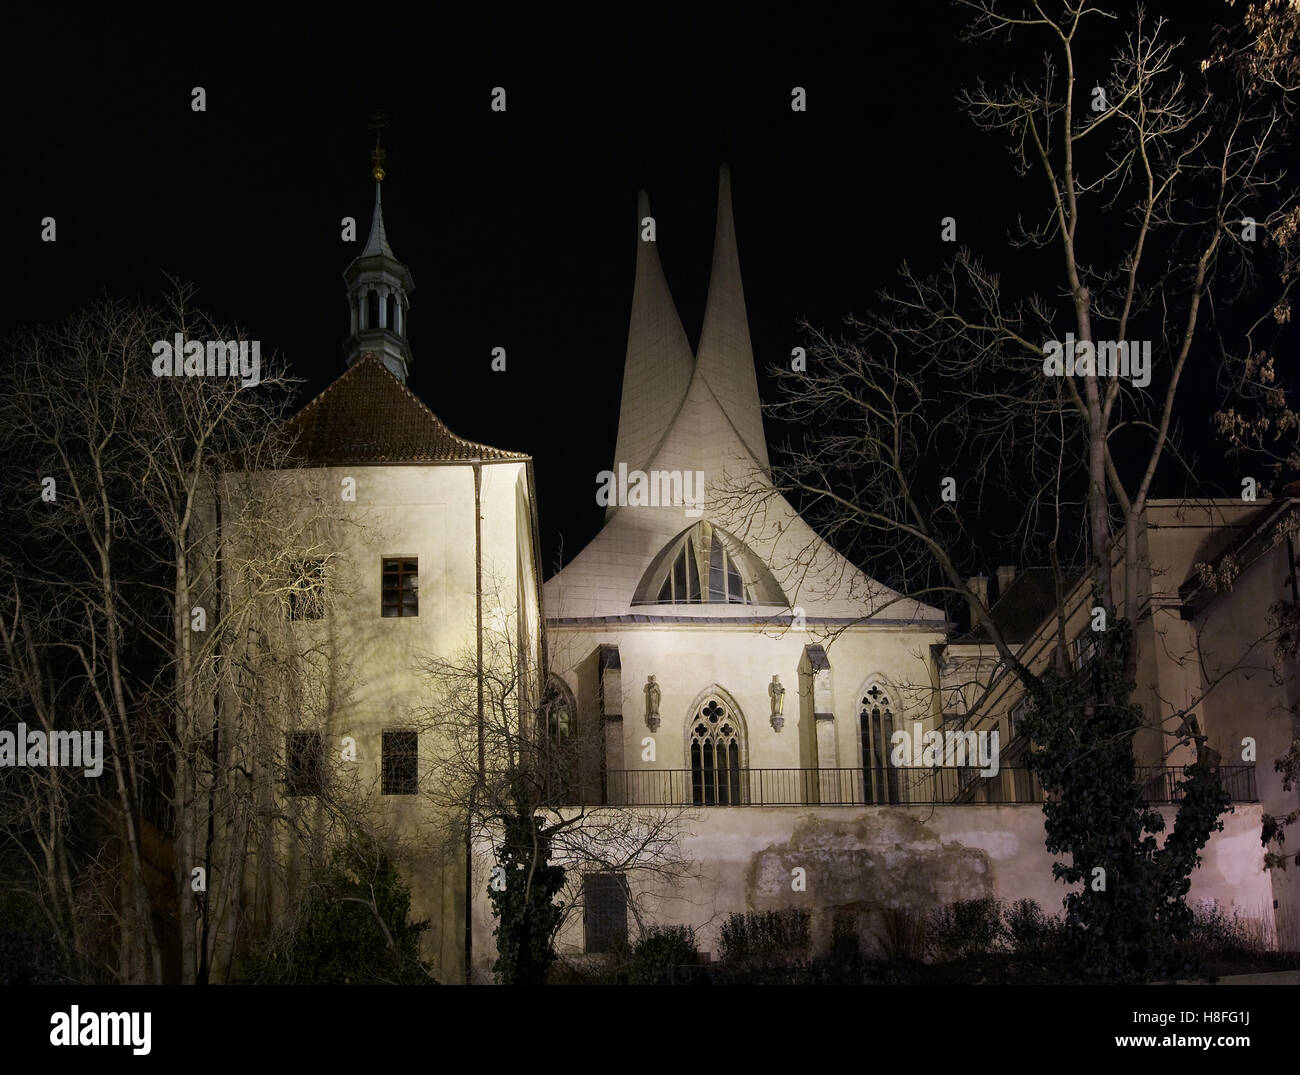 Emauzy monastery - architectural monument from fourteen century, Prague Stock Photo